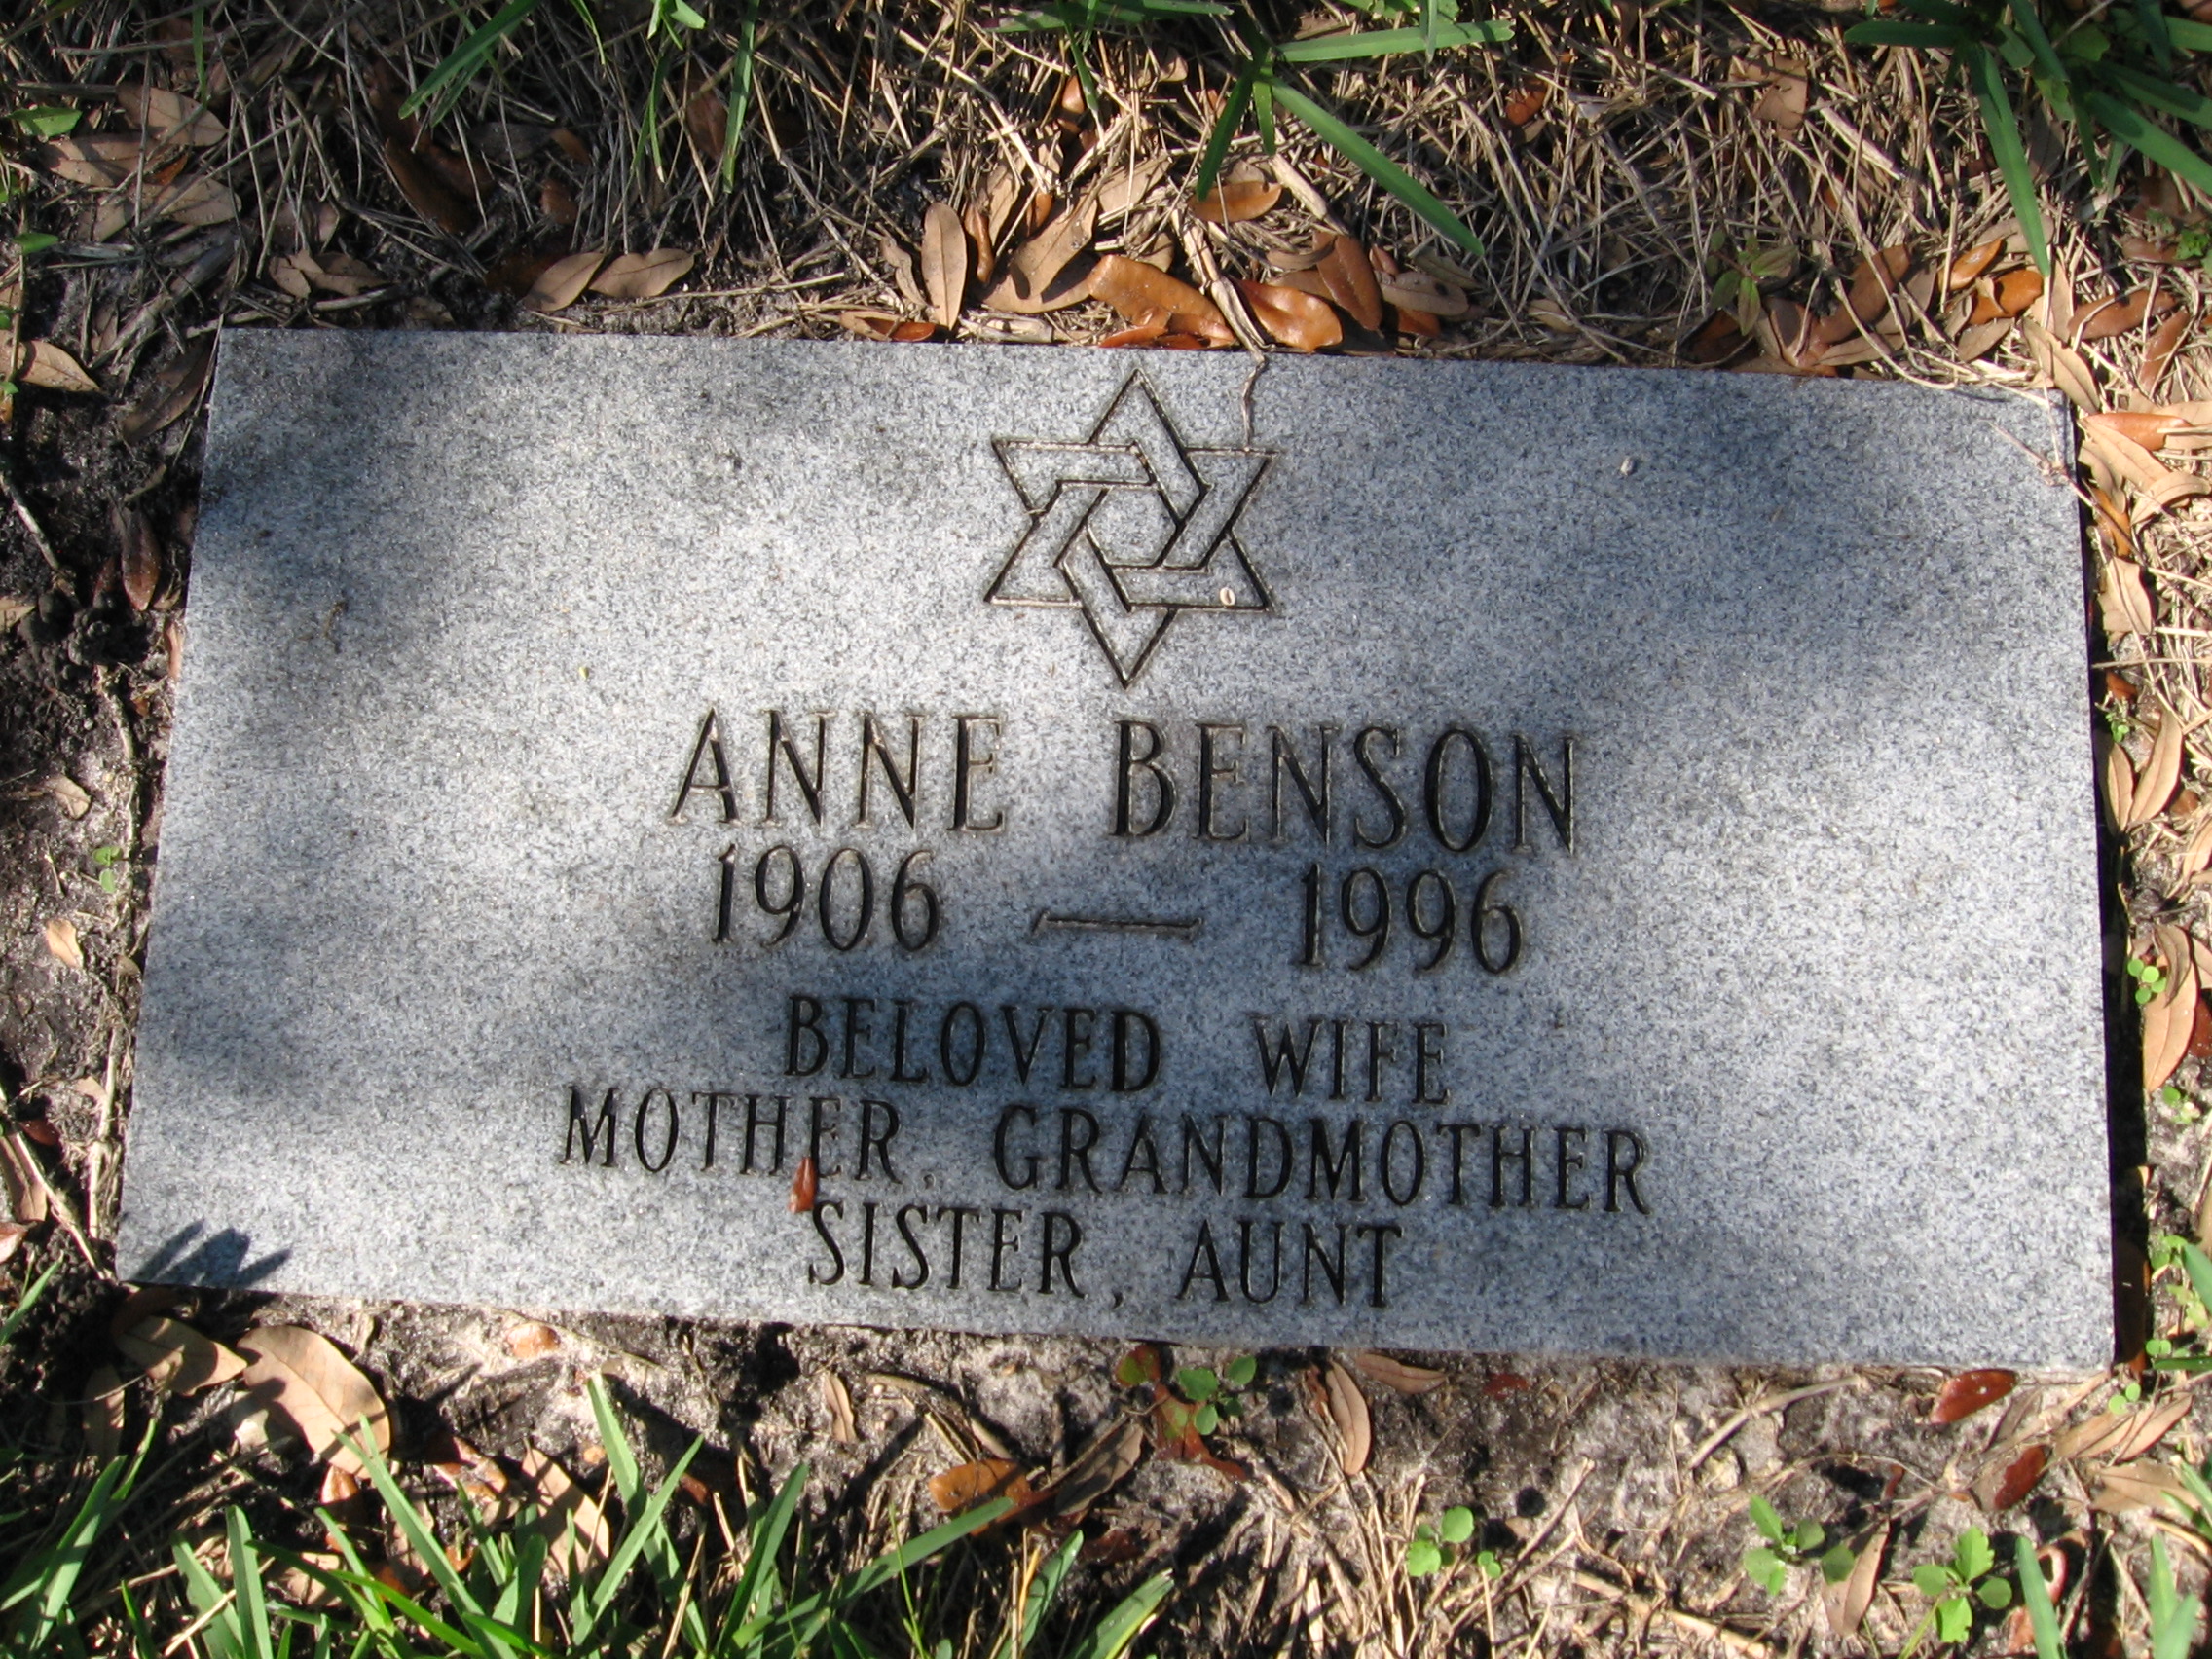 Anne Benson